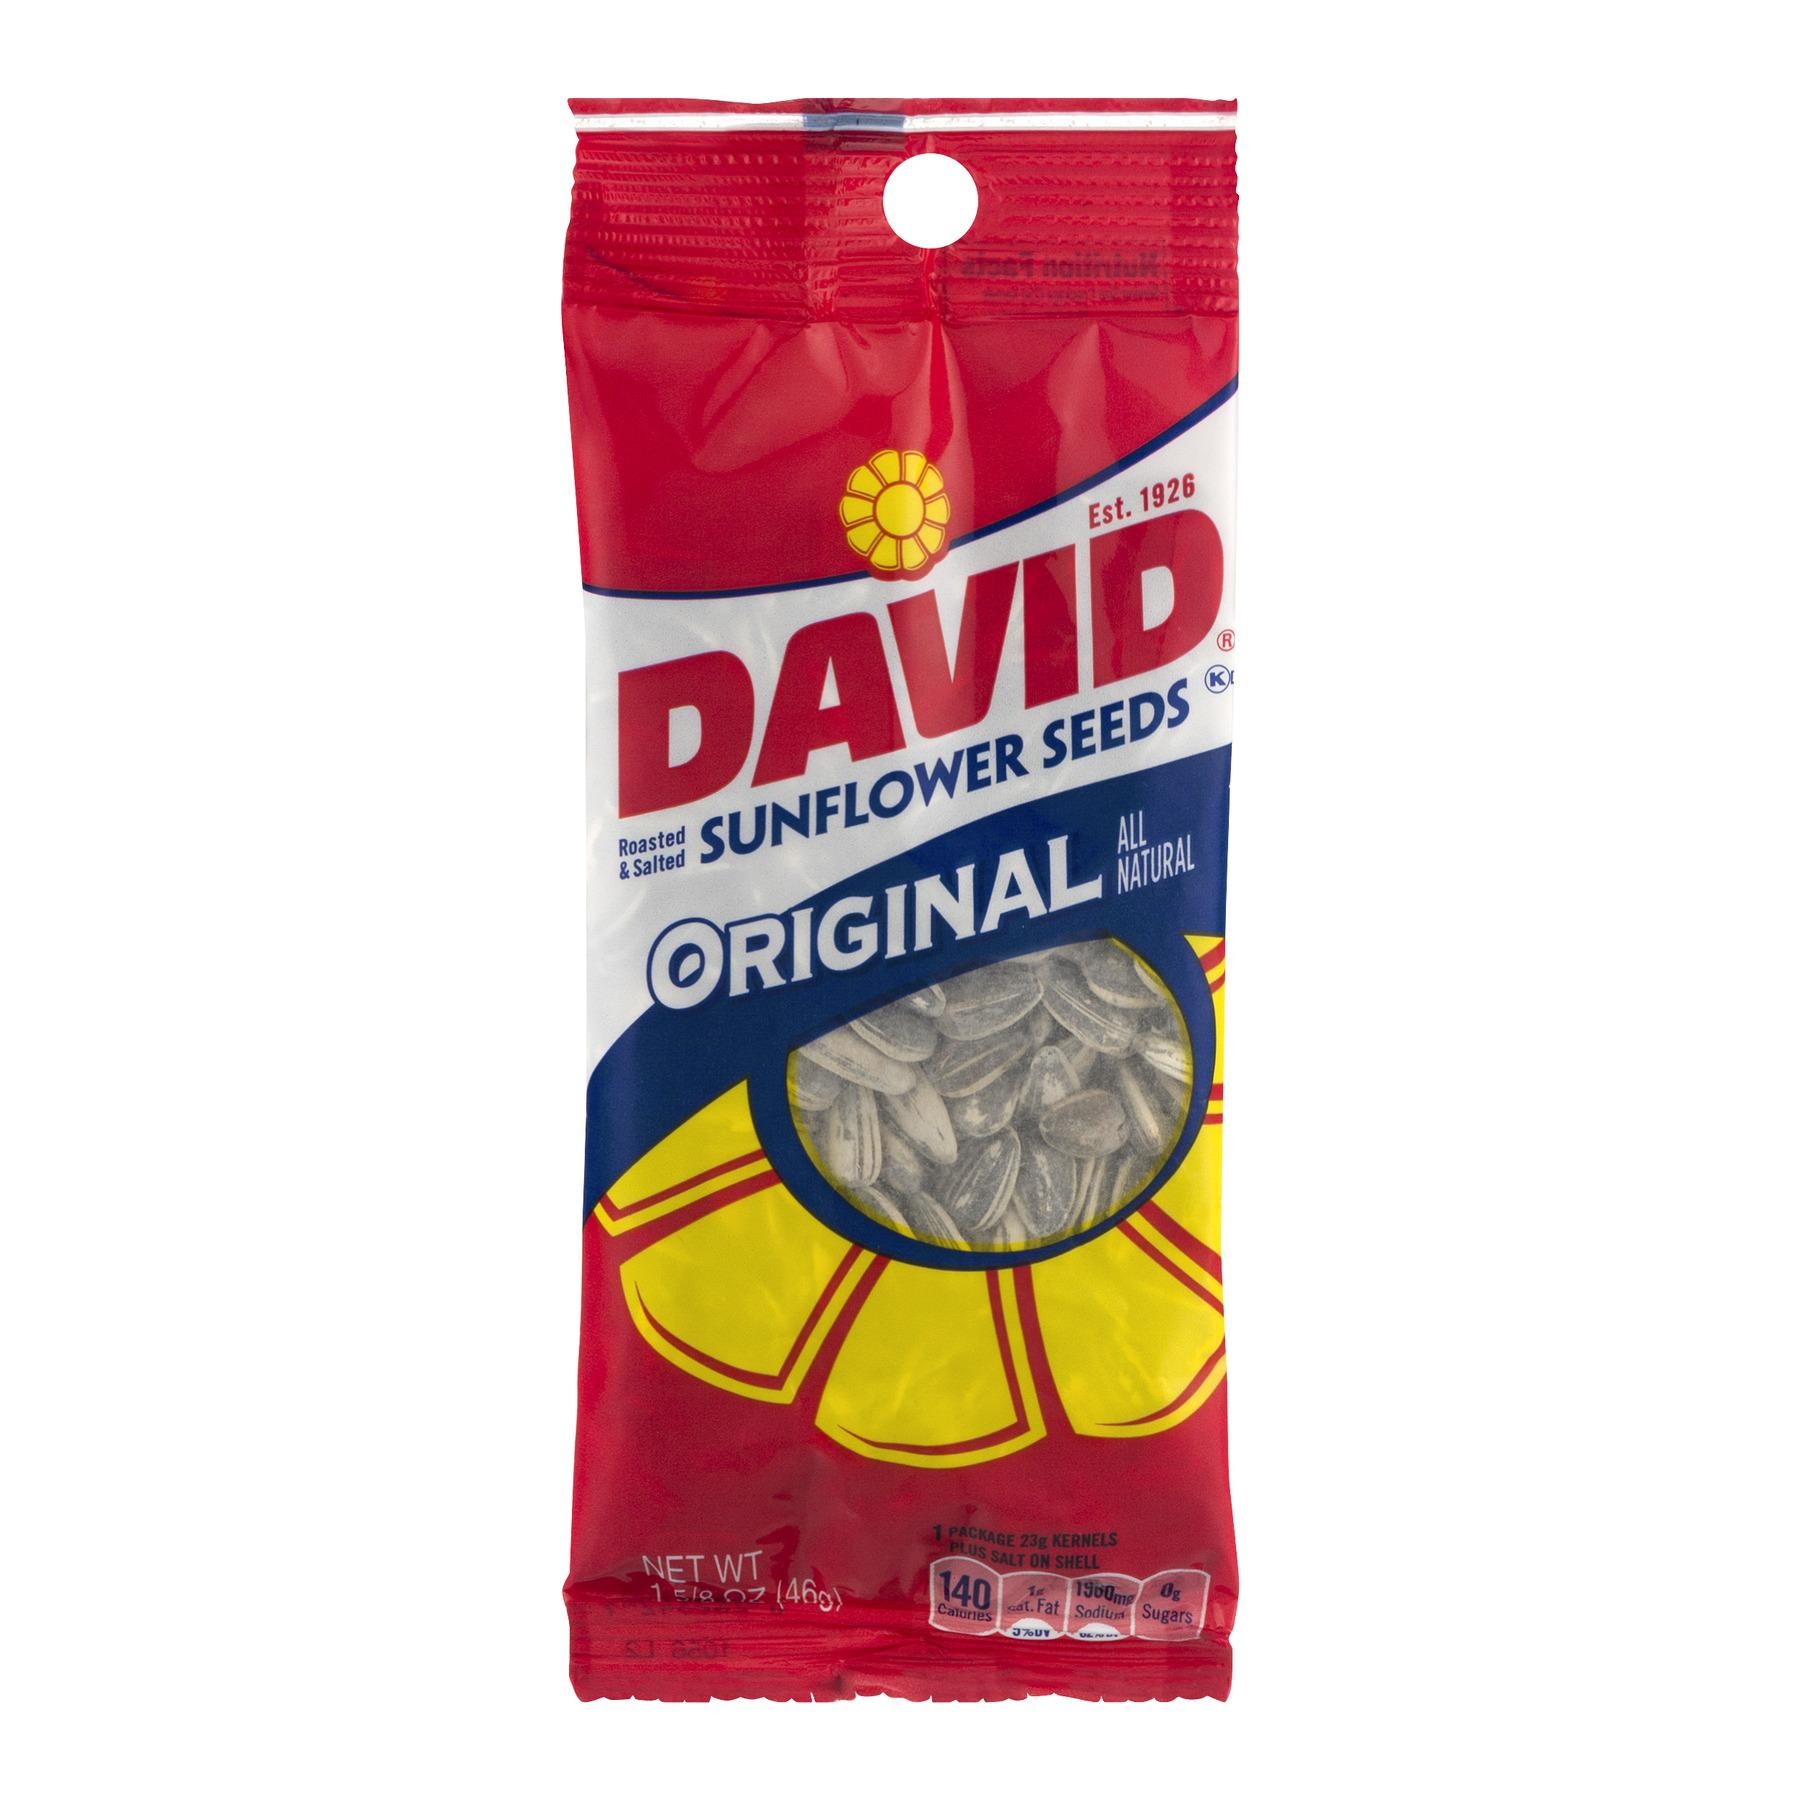 David Sunflower Seeds Original - 1.62 Oz